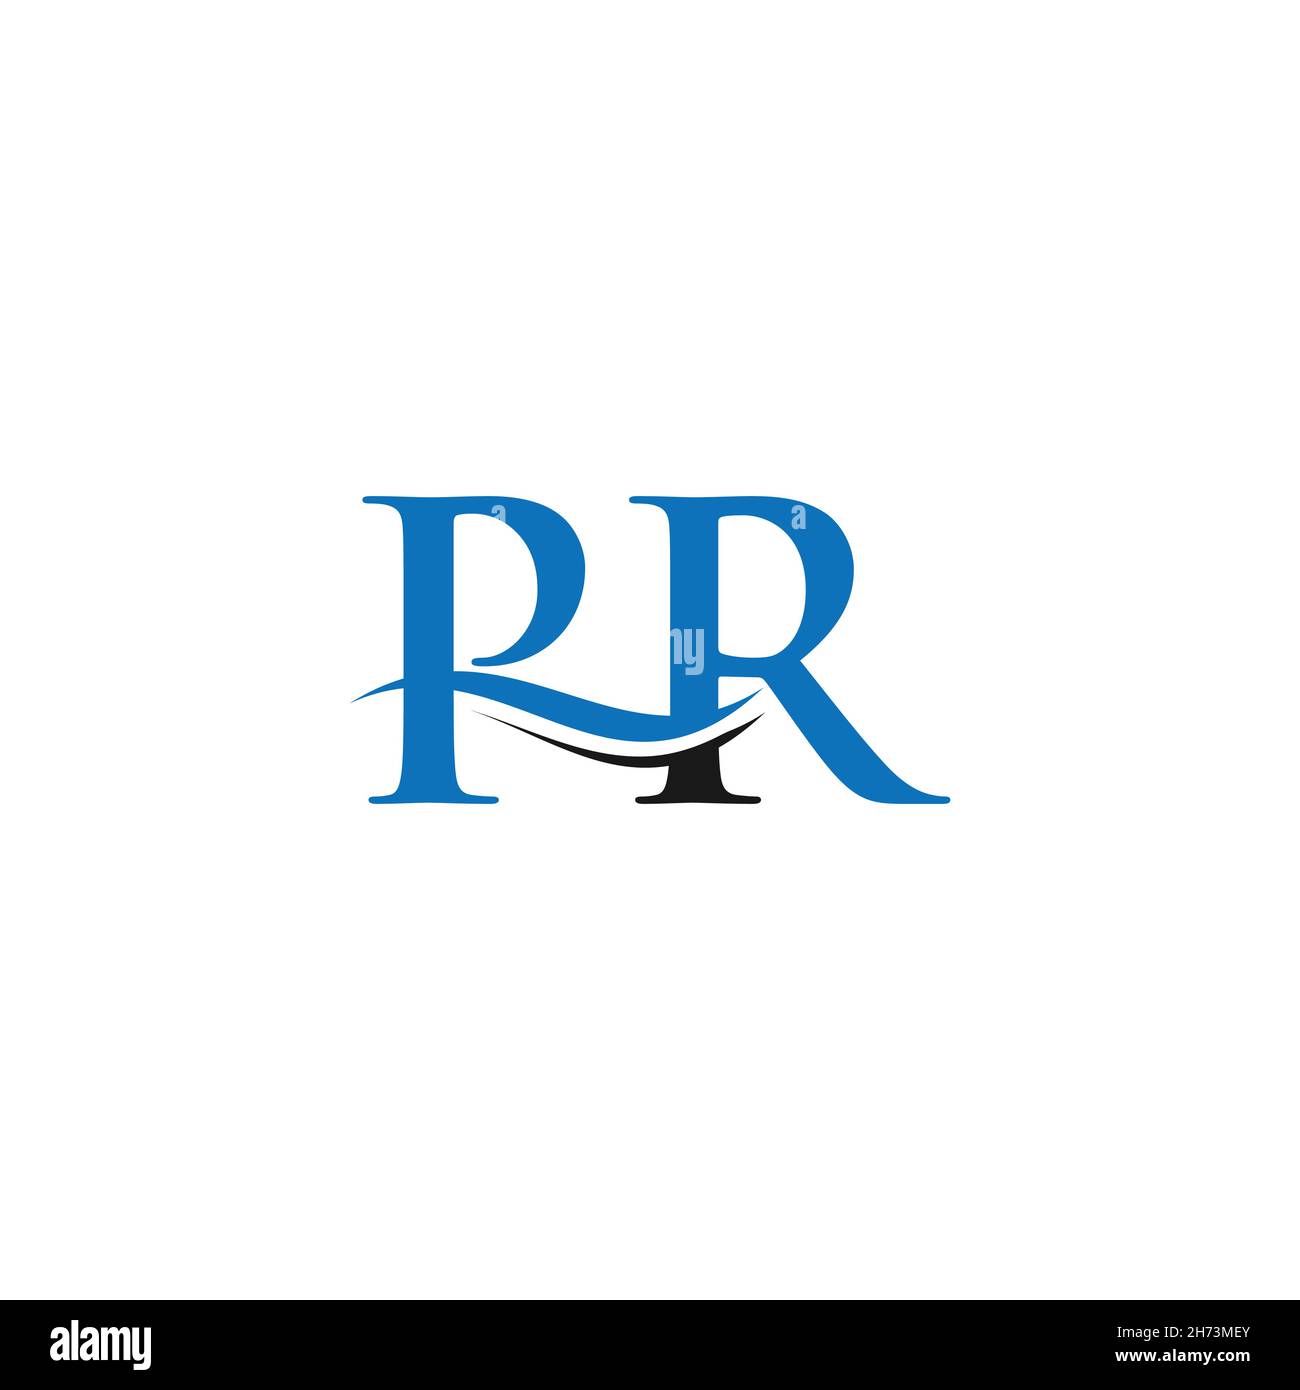 PR logo Design. Premium Letter PR Logo Design with water wave concept. Stock Vector